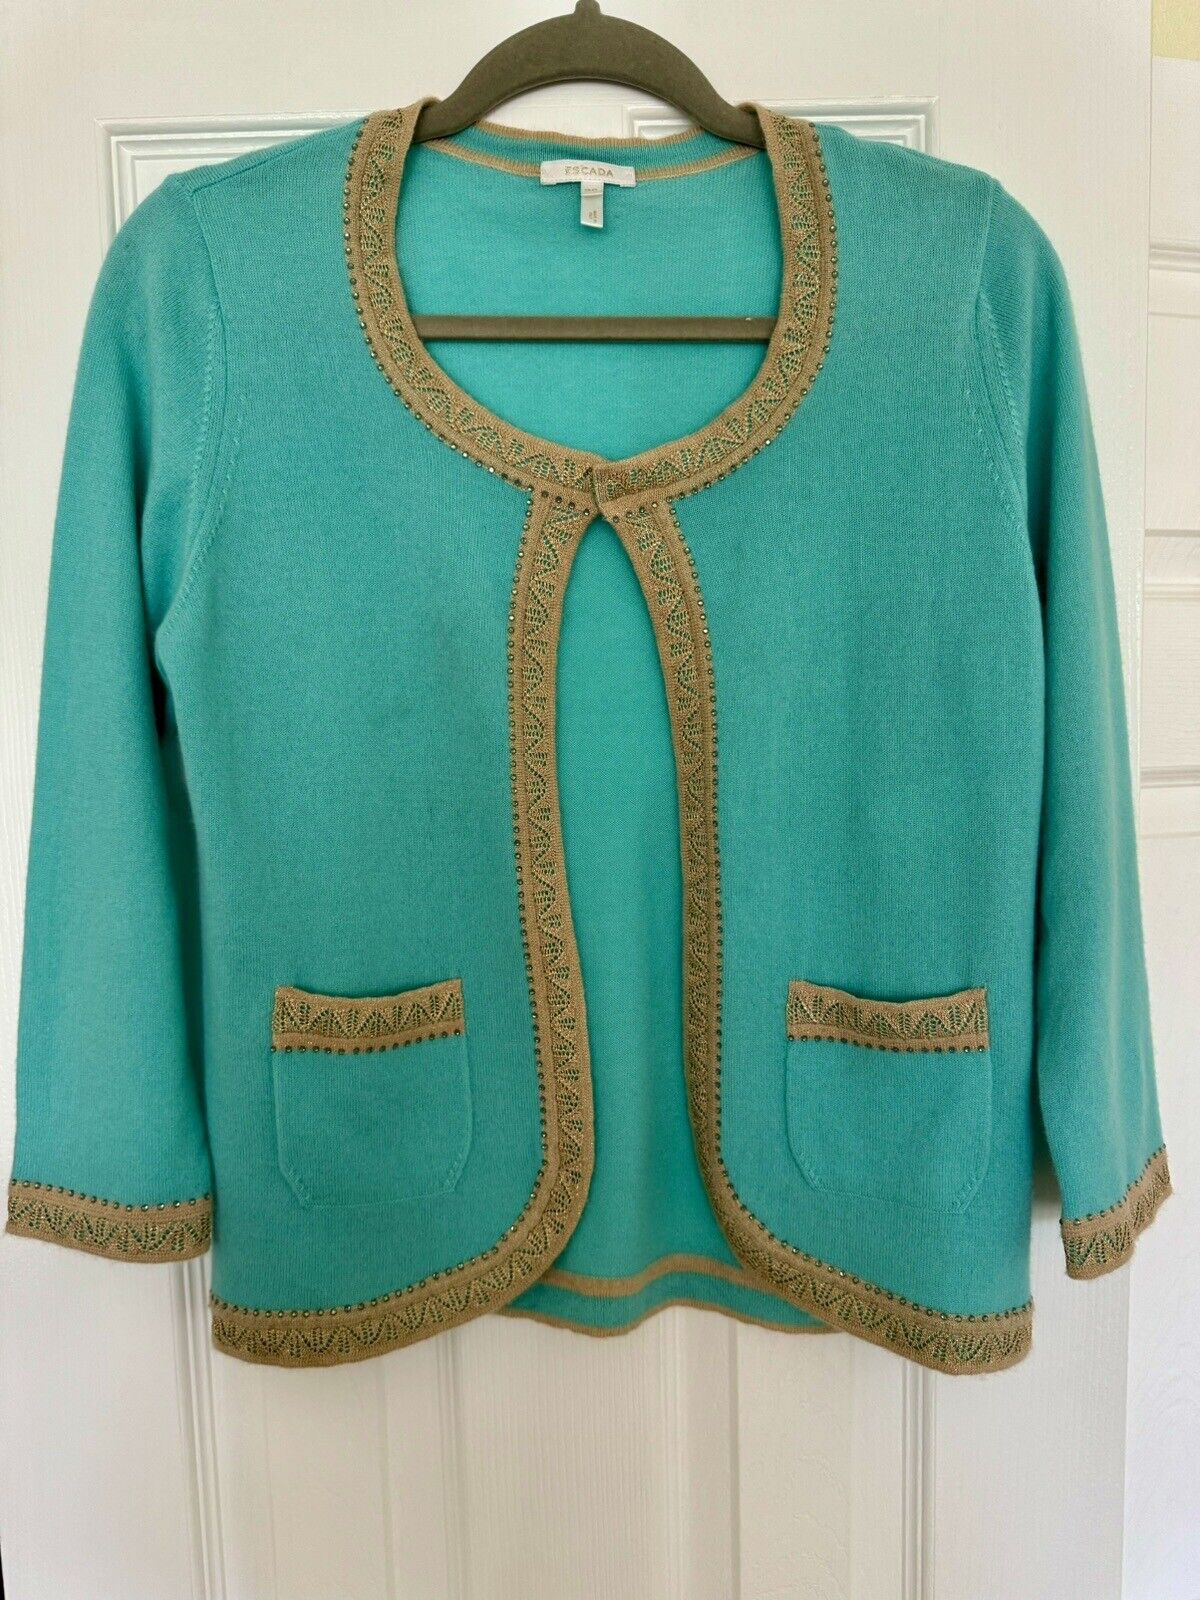 Escada sweater EUC - turquoise blue with embellished gold camel trim size 38